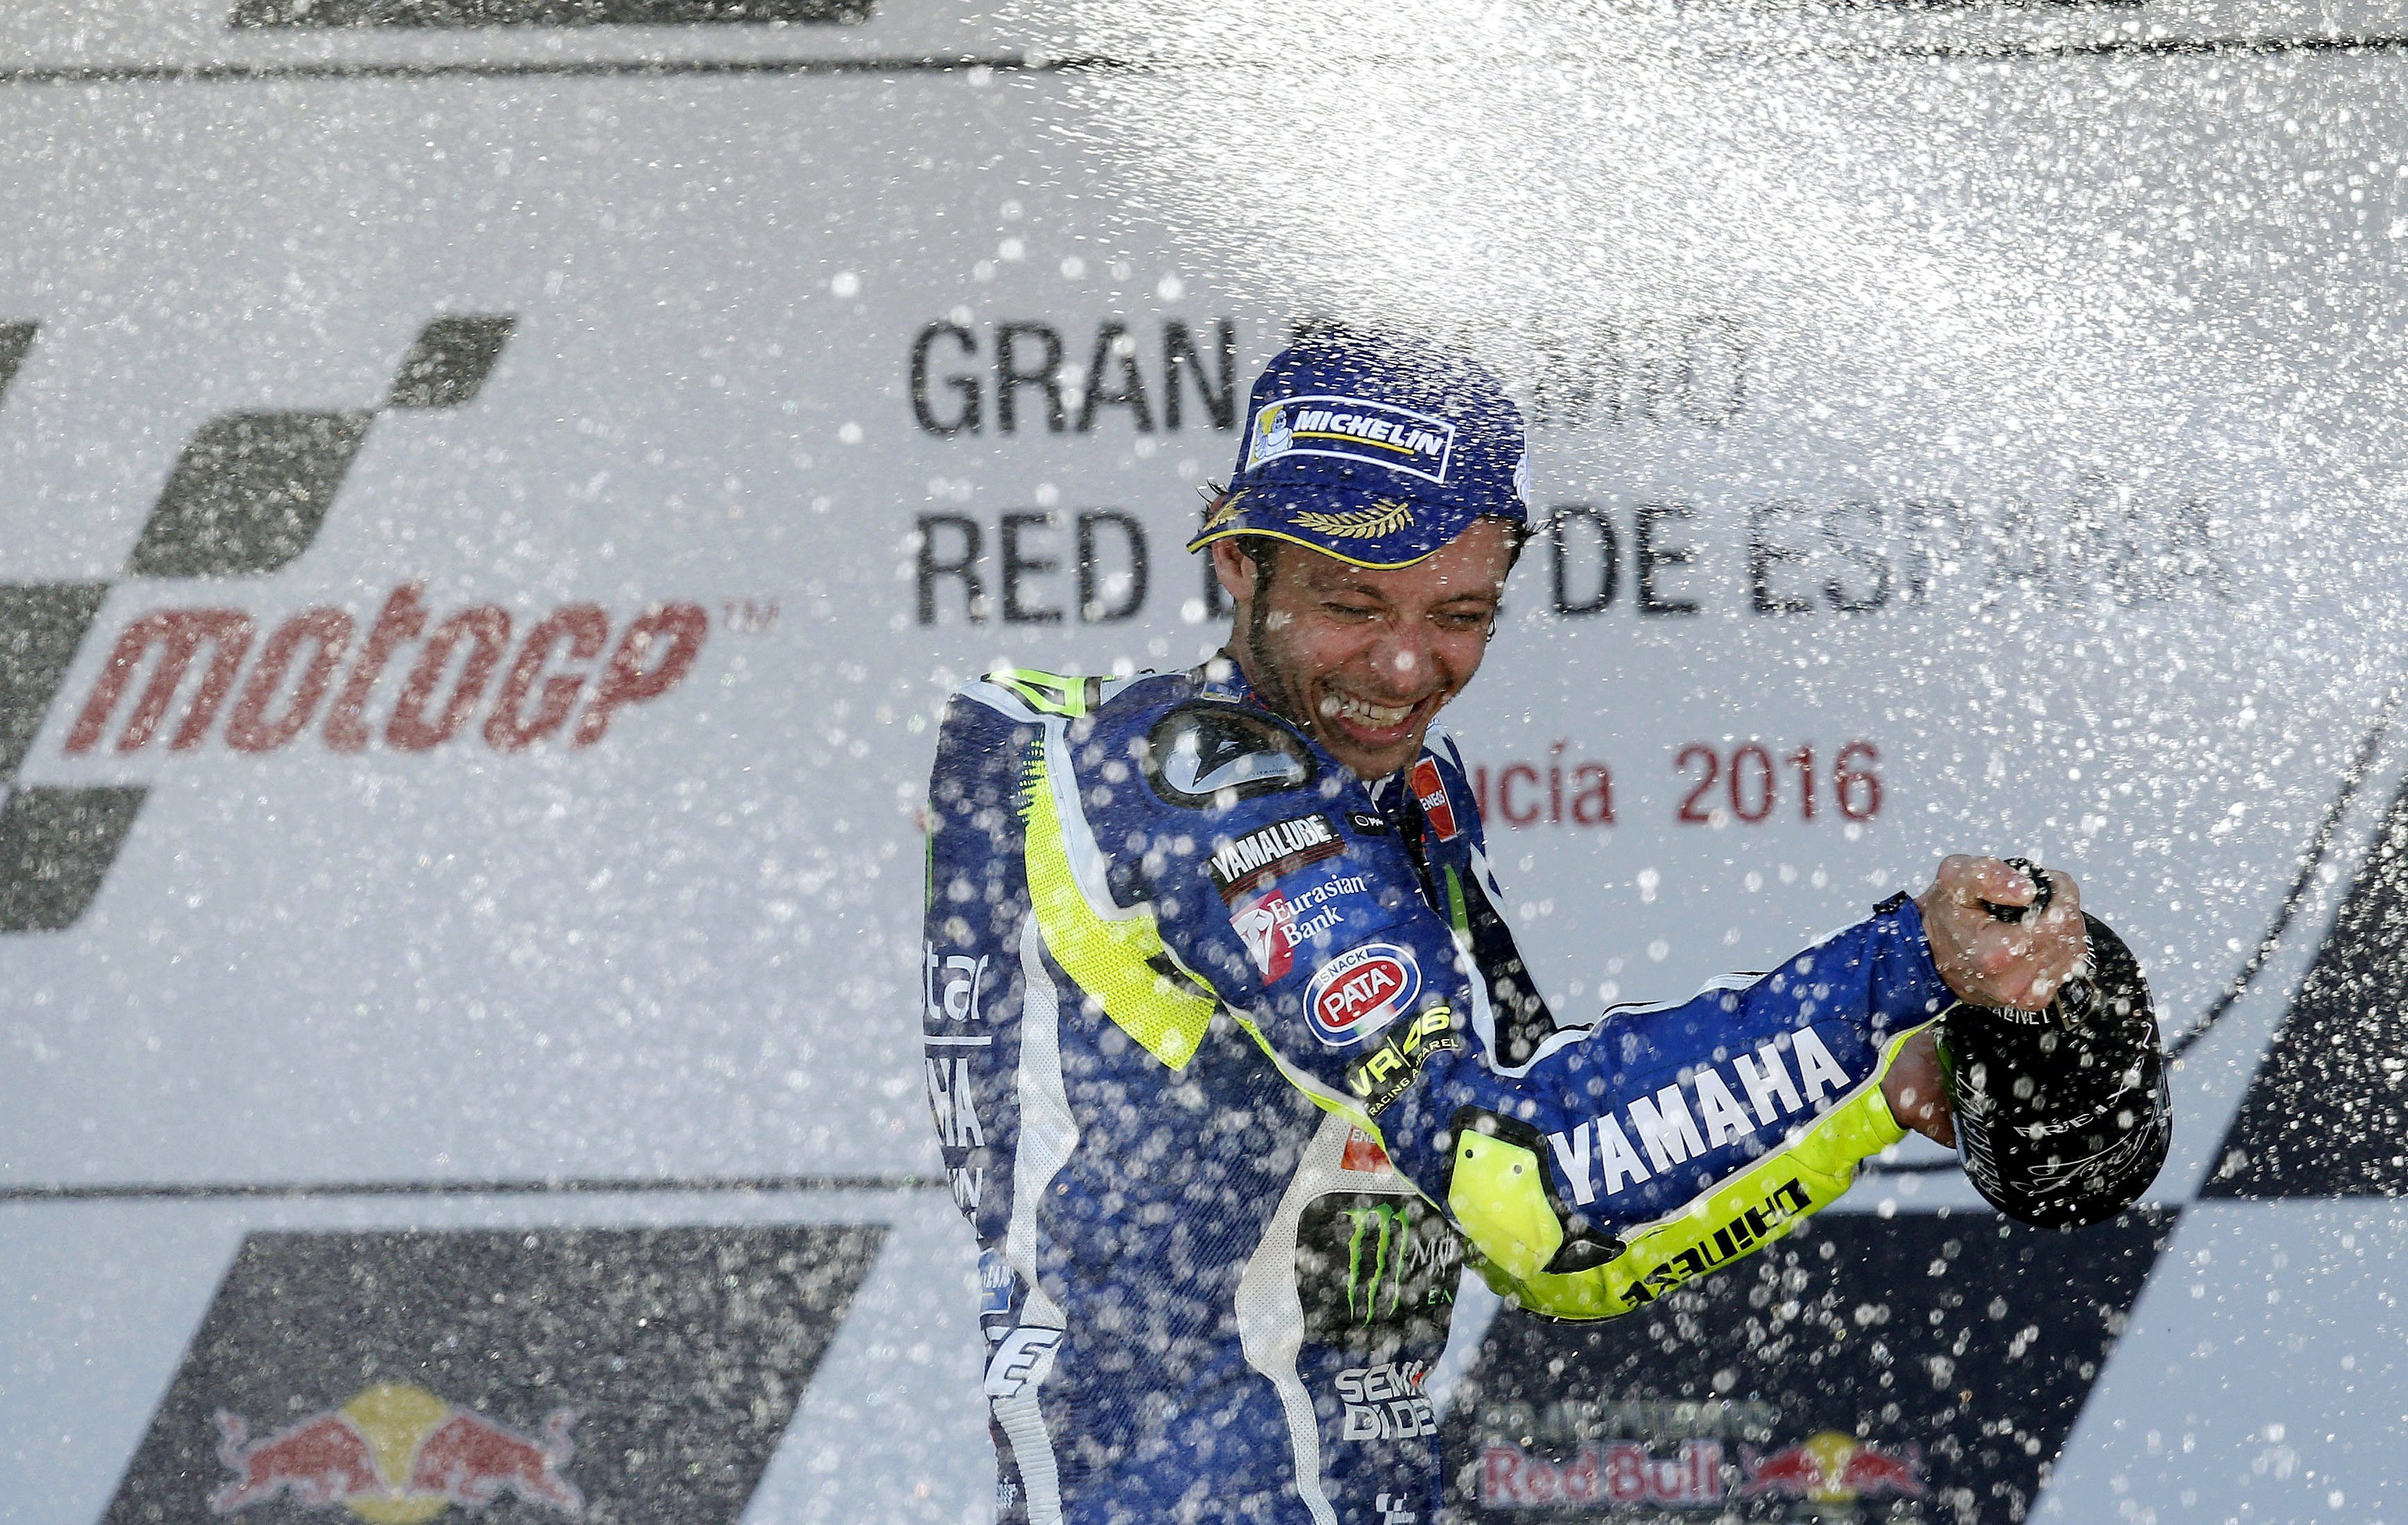 Moto GP – Jerez 2016: Nίκη με επίδειξη ισχύος από τον V. Rossi